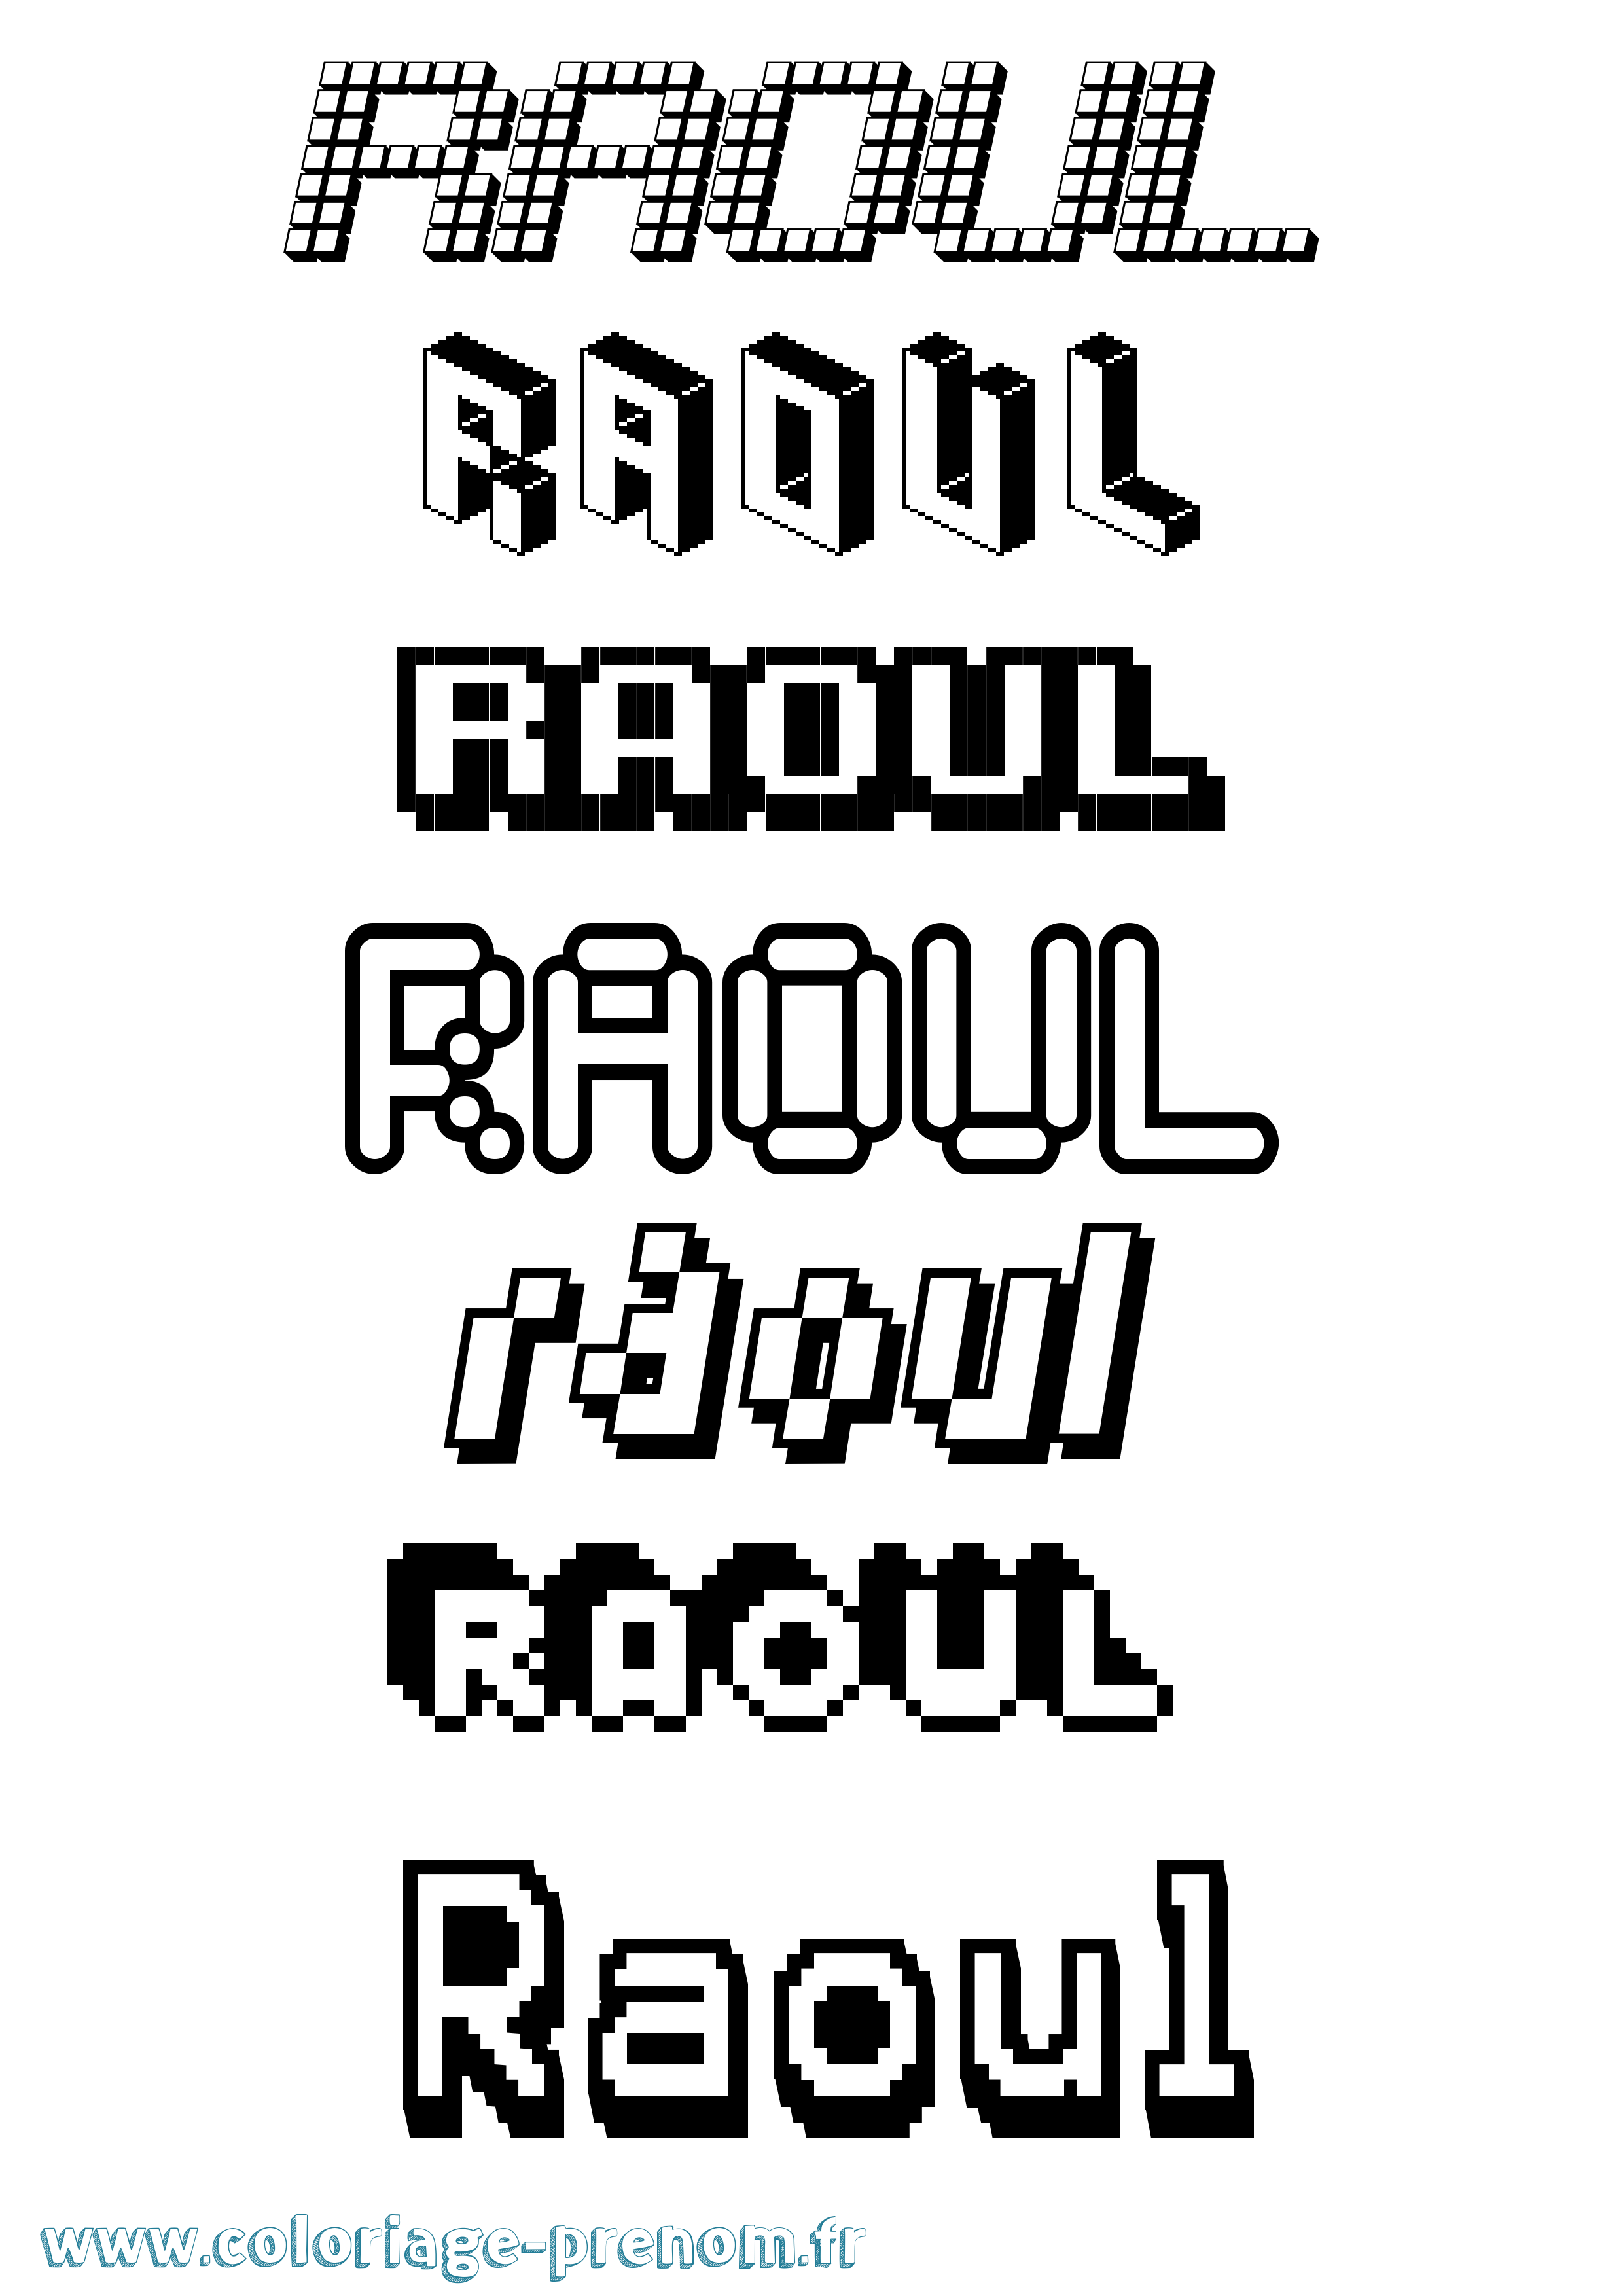 Coloriage prénom Raoul Pixel